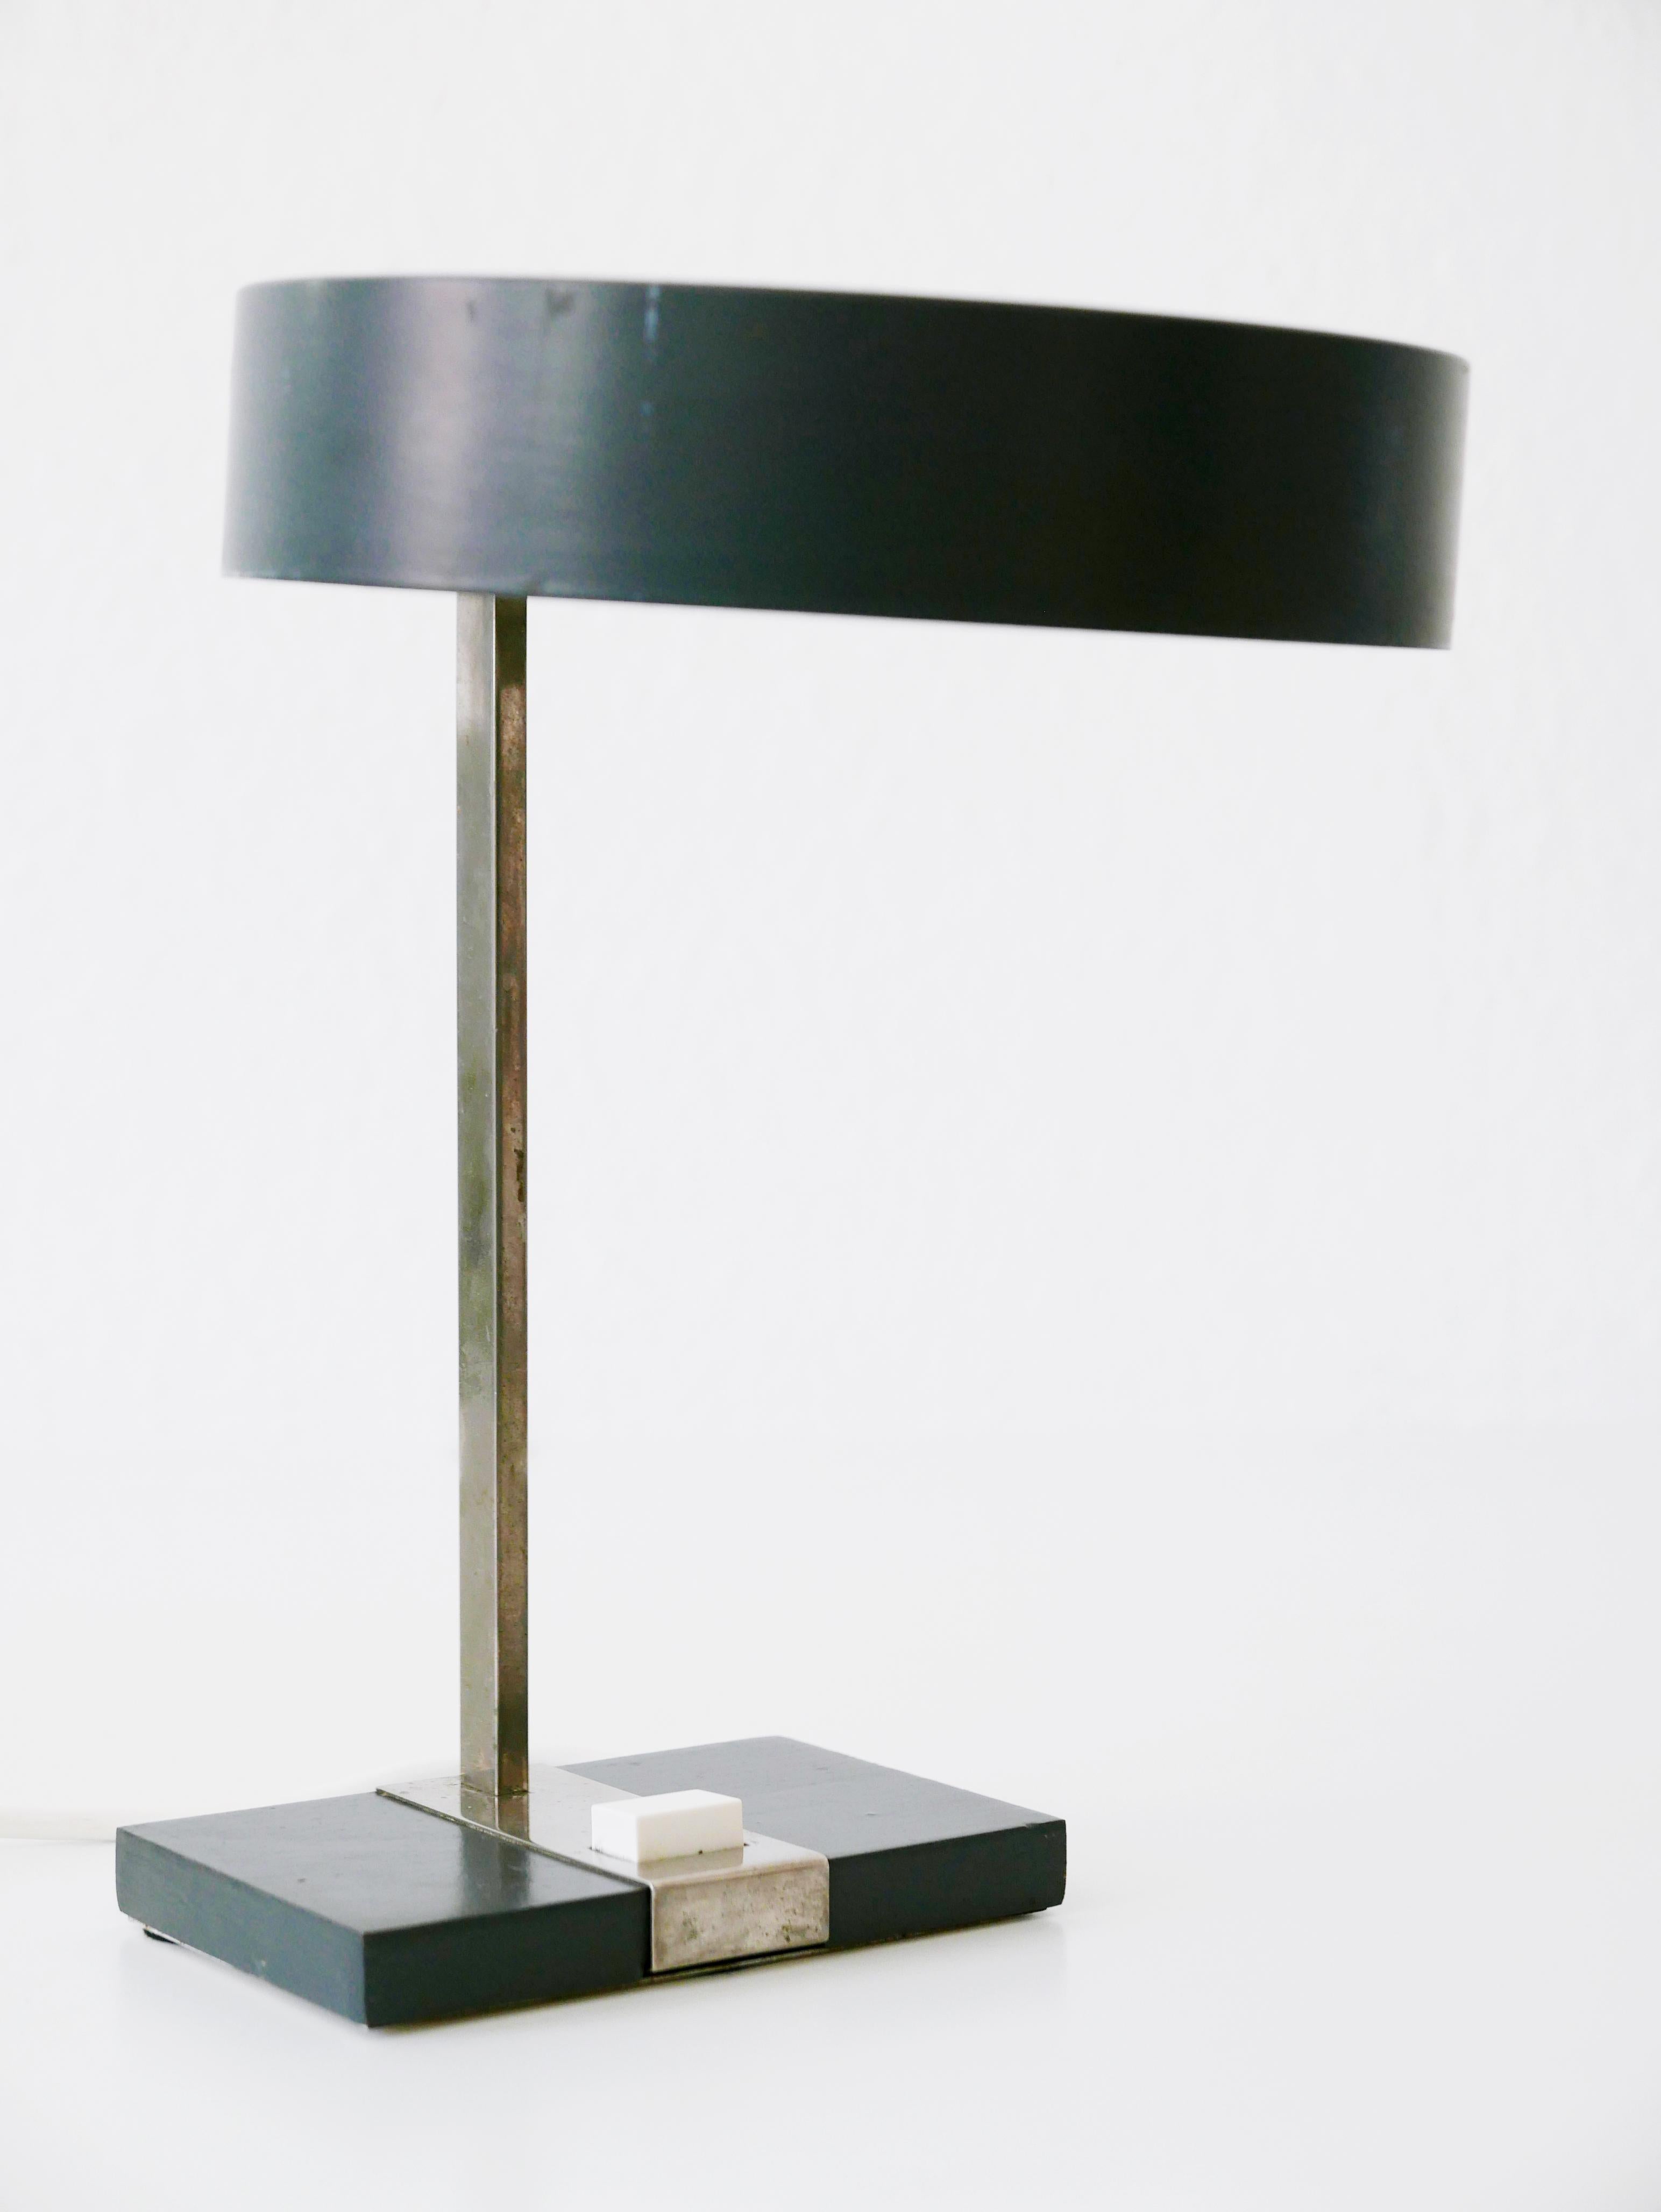 Elegant Mid-Century Modern Table Lamp or Desk Light by Hillebrand, 1960s Germany For Sale 1